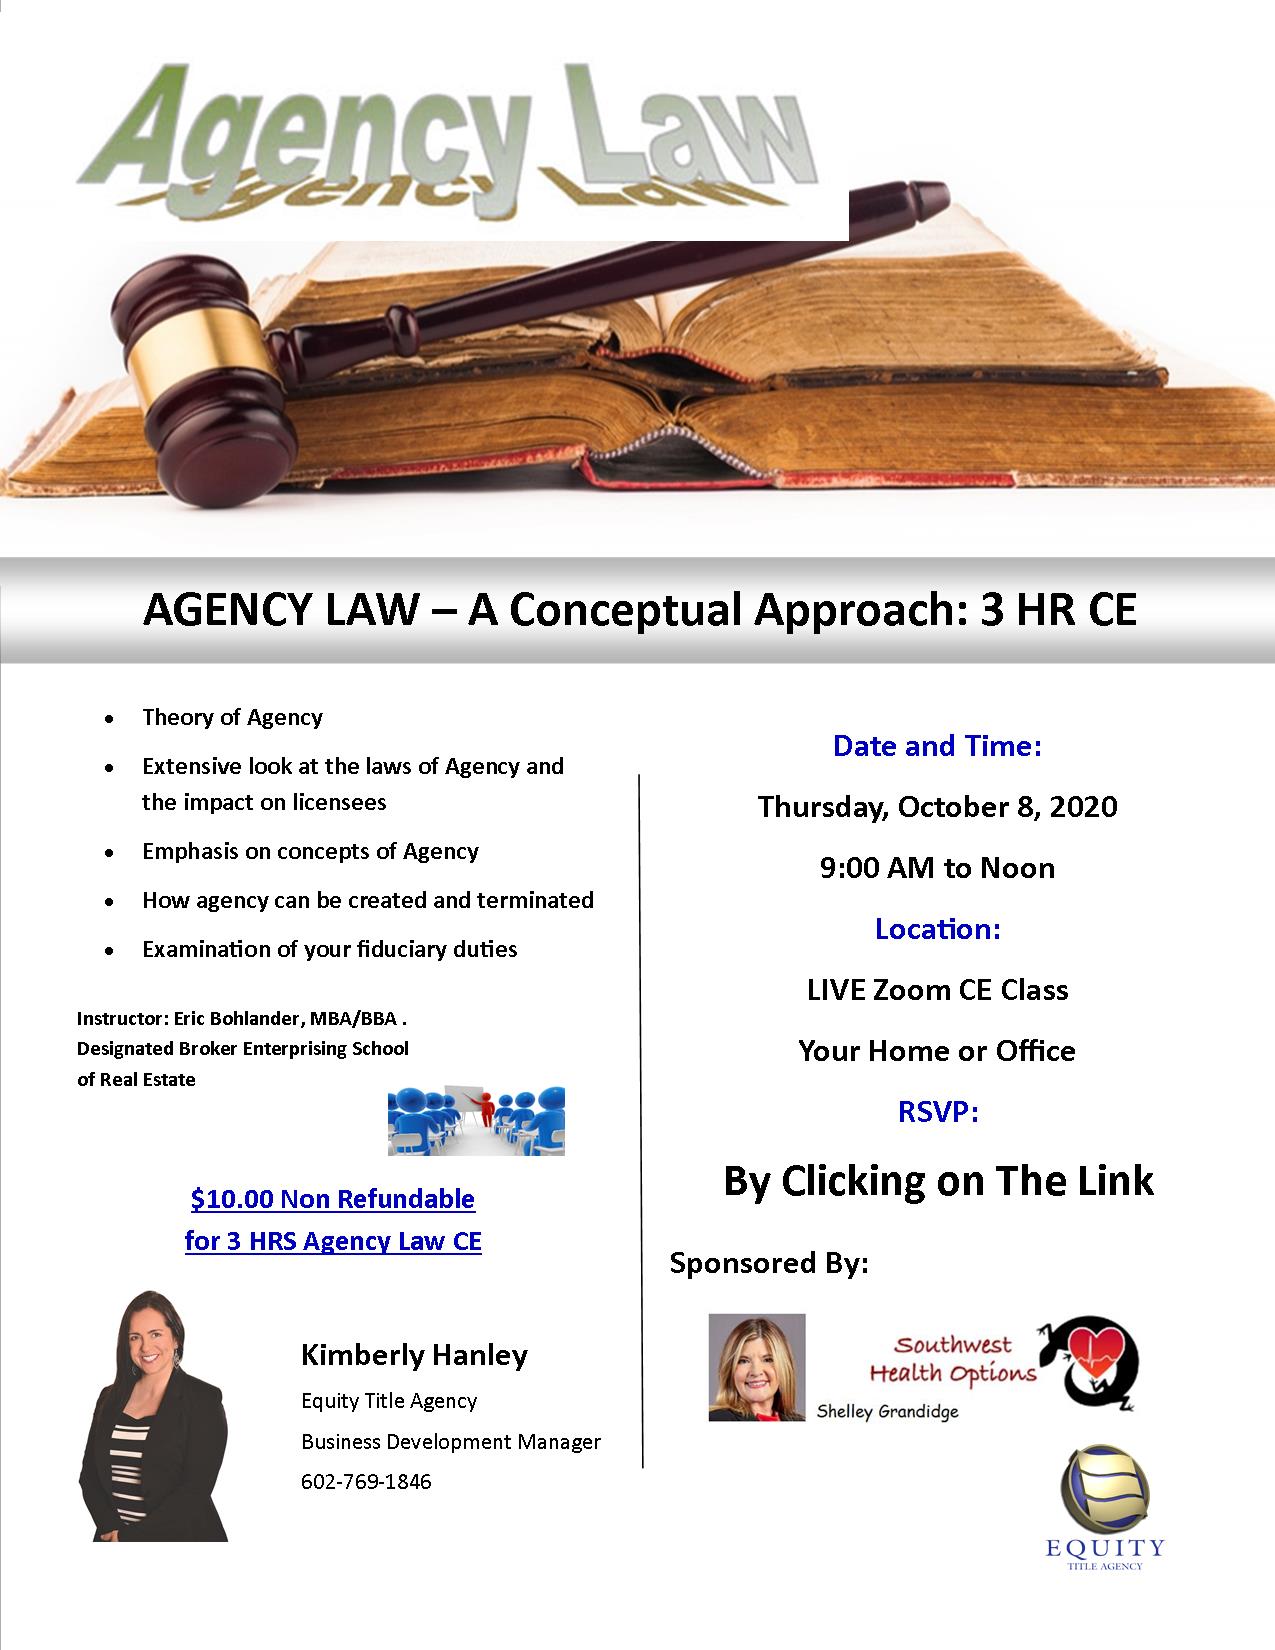 Agency Law – CE Class